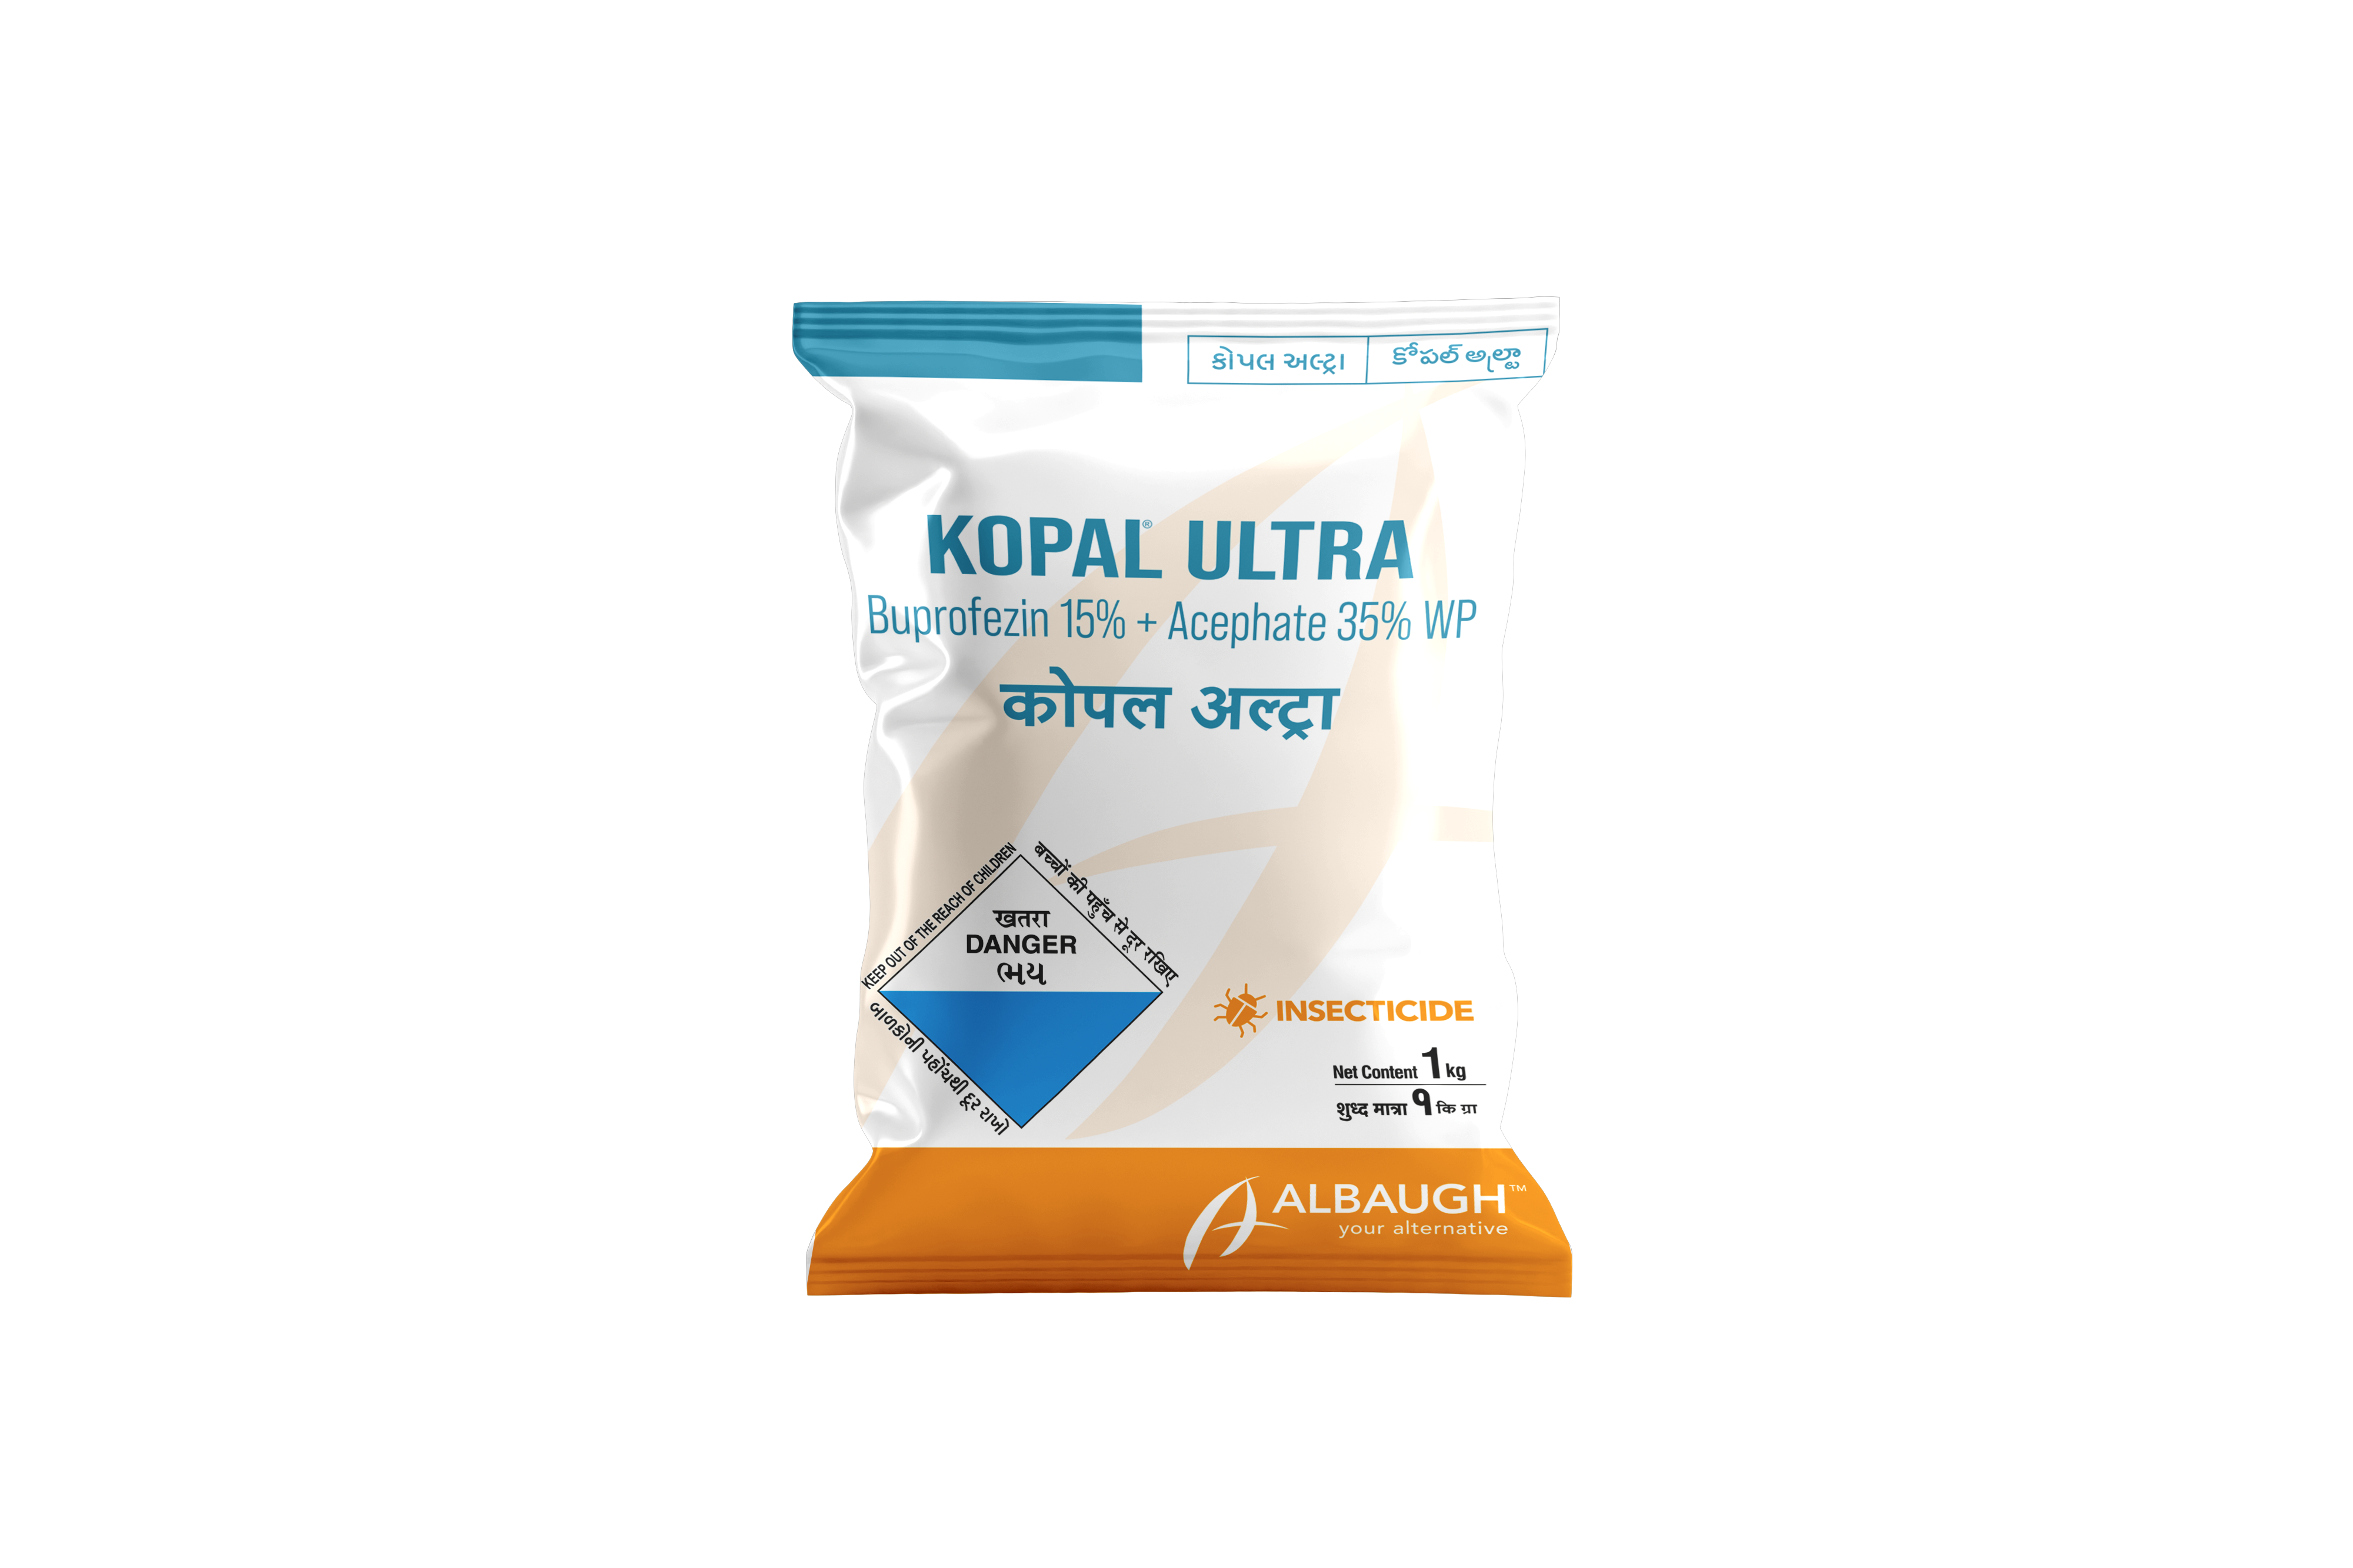 Kopal Ultra: Buprofezin 15%+ Acephate 35% WP